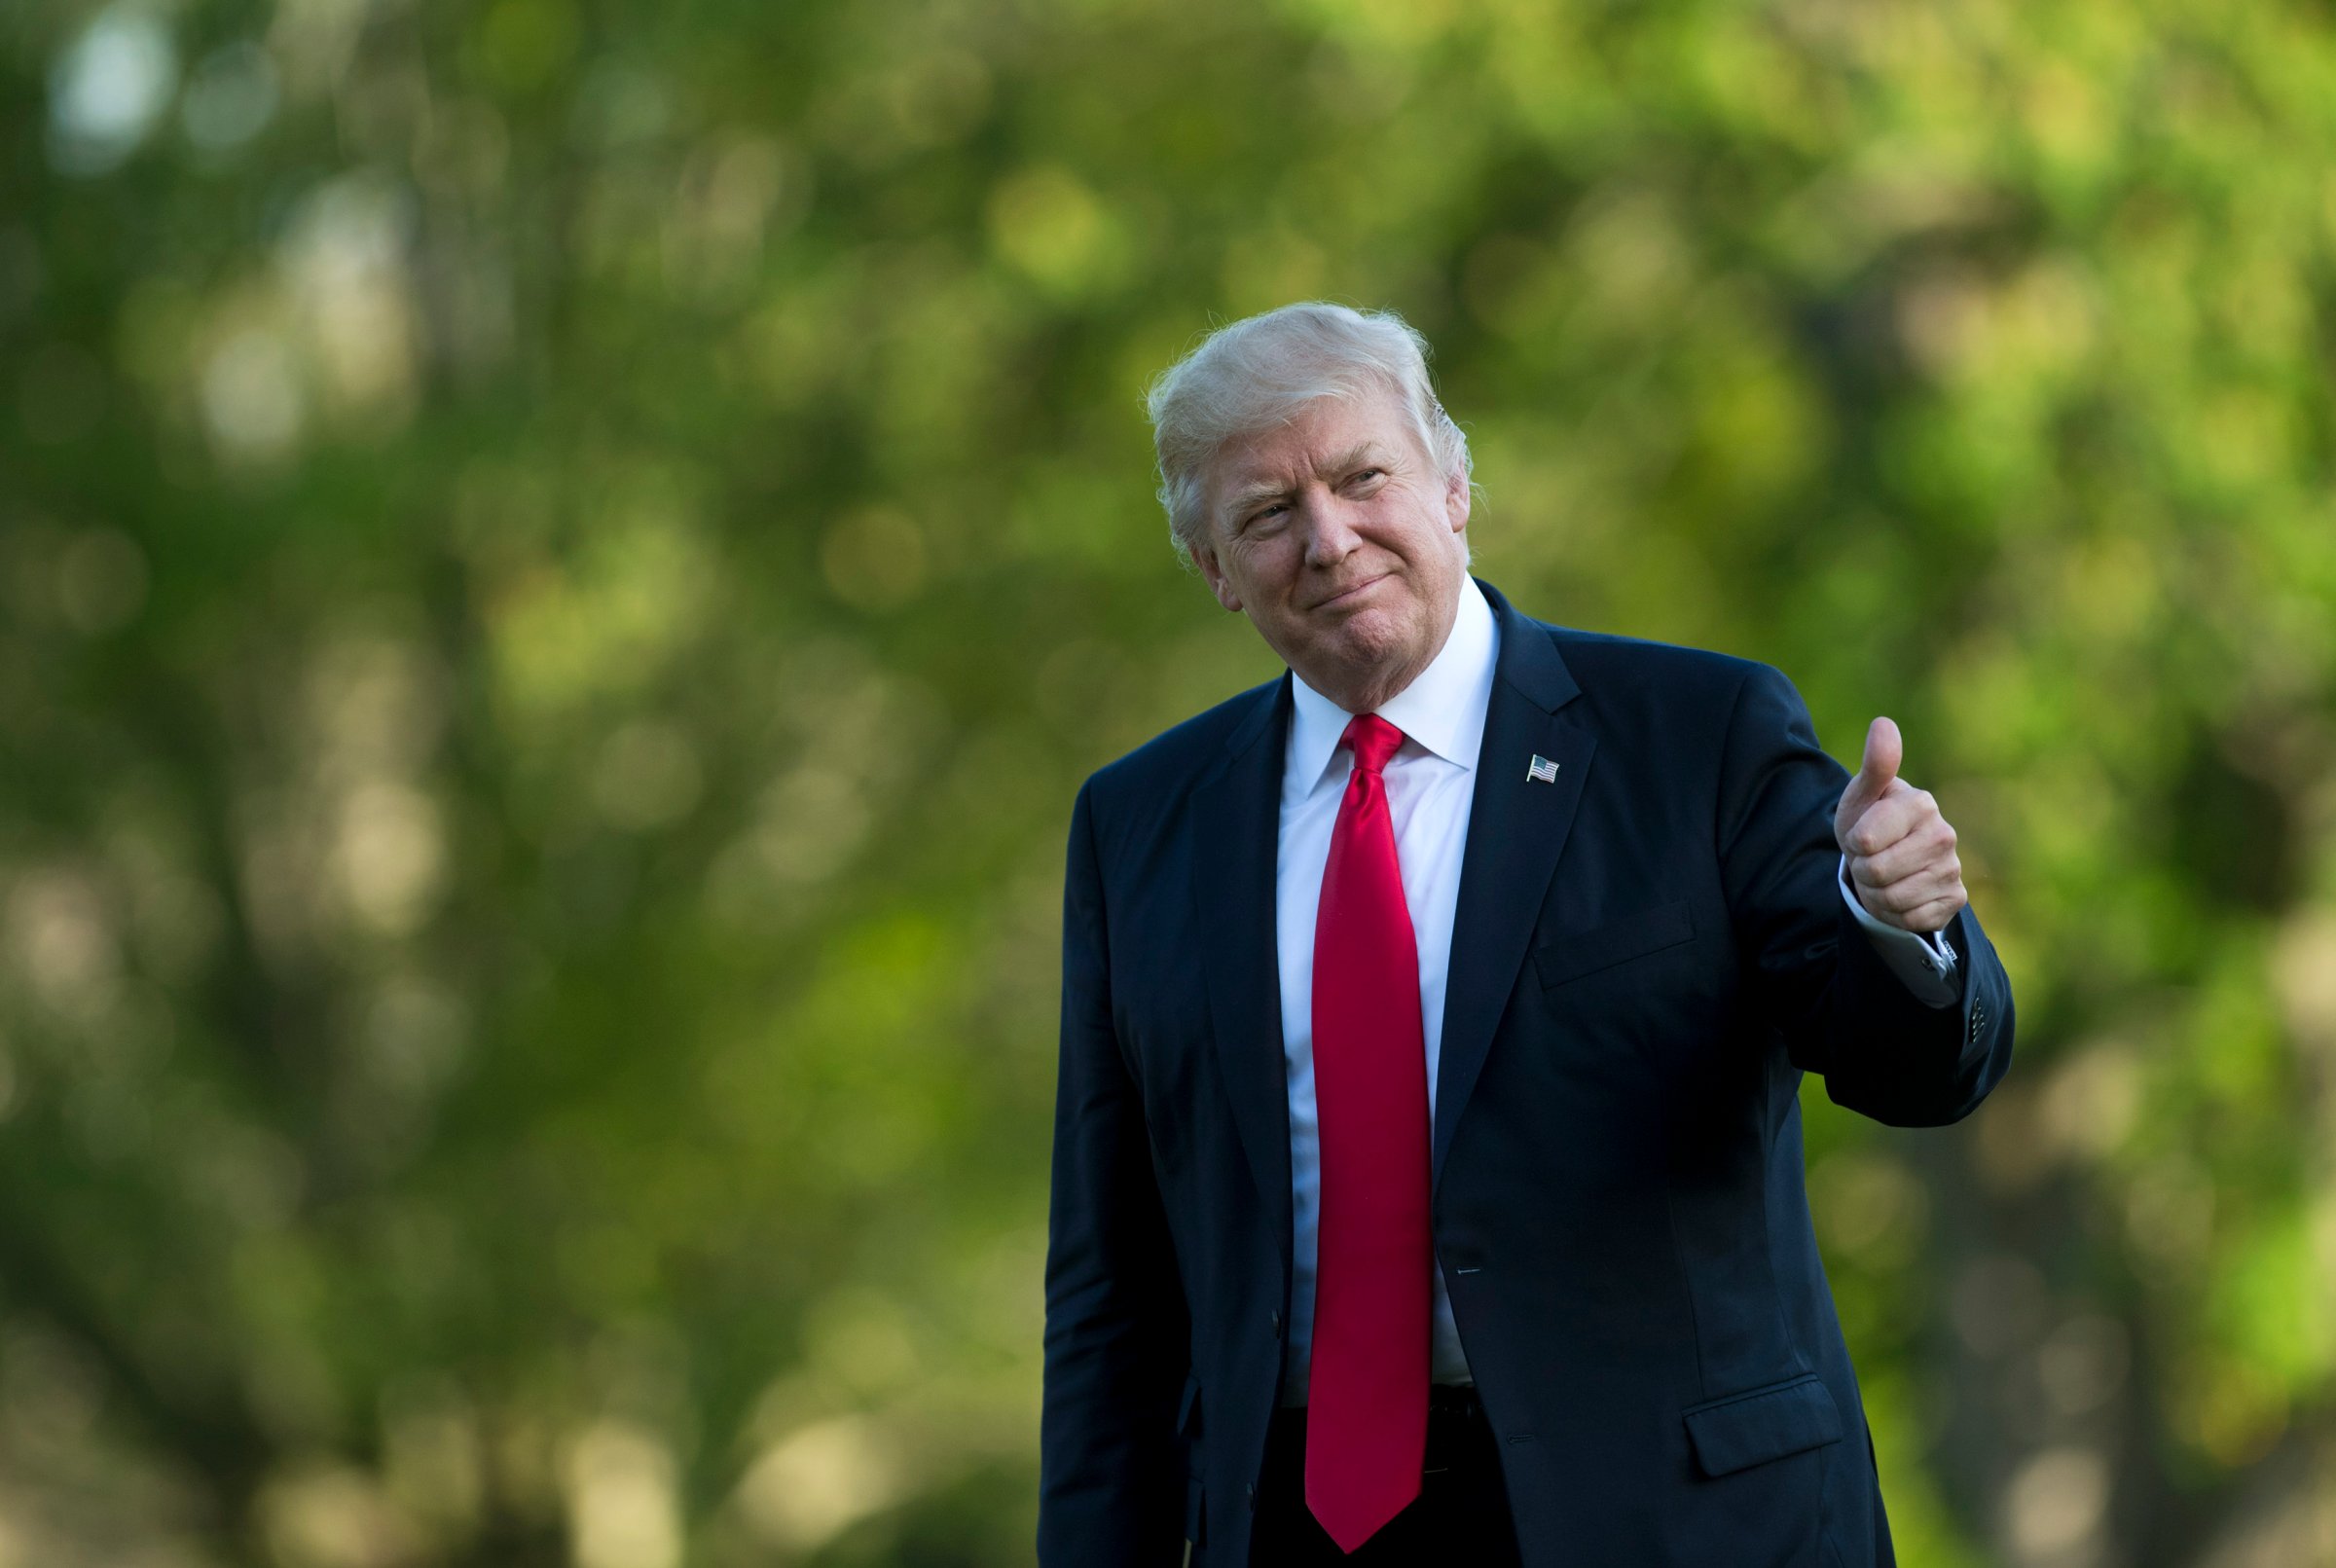 President Donald Trump Returns to the White House